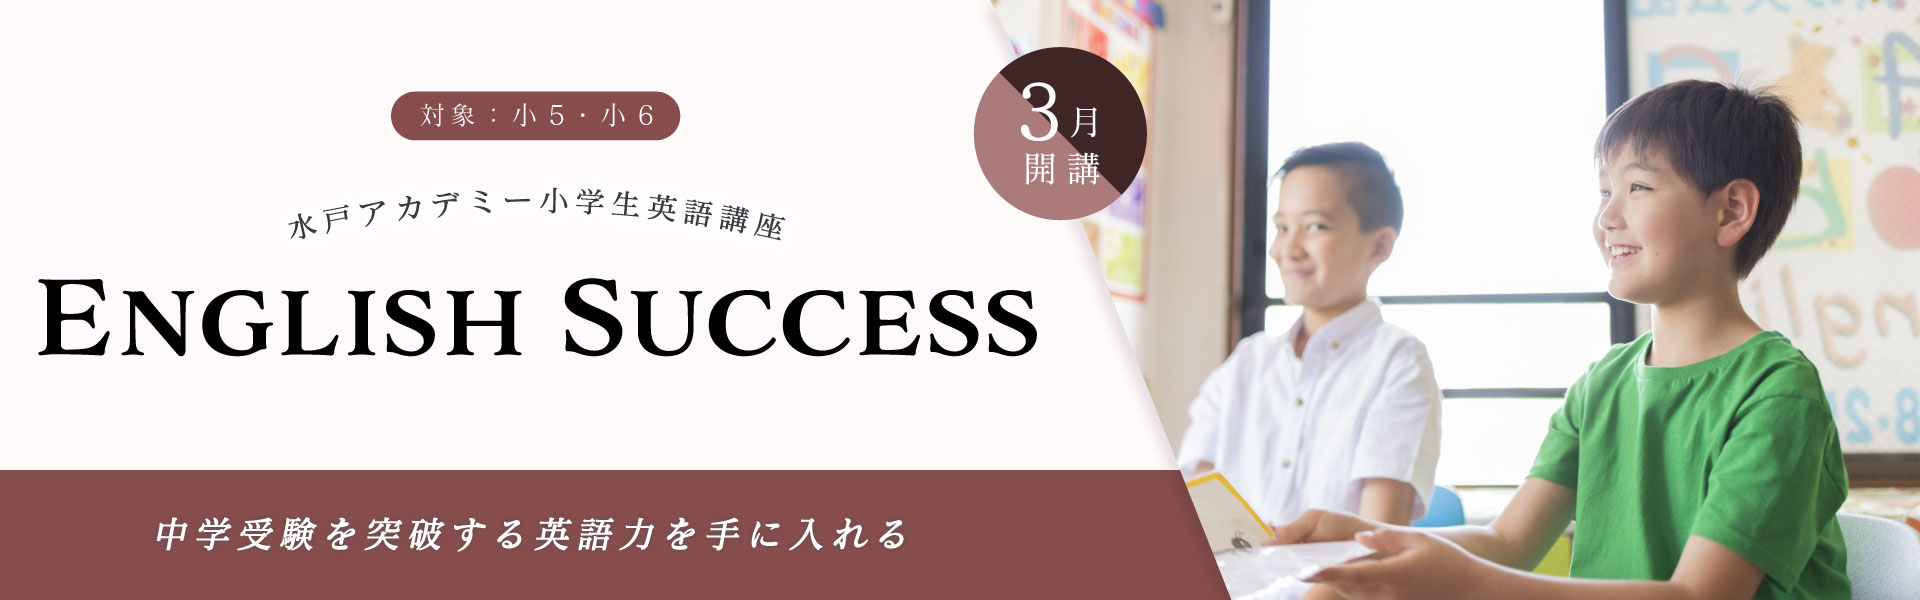 ENGLISH SUCCESS